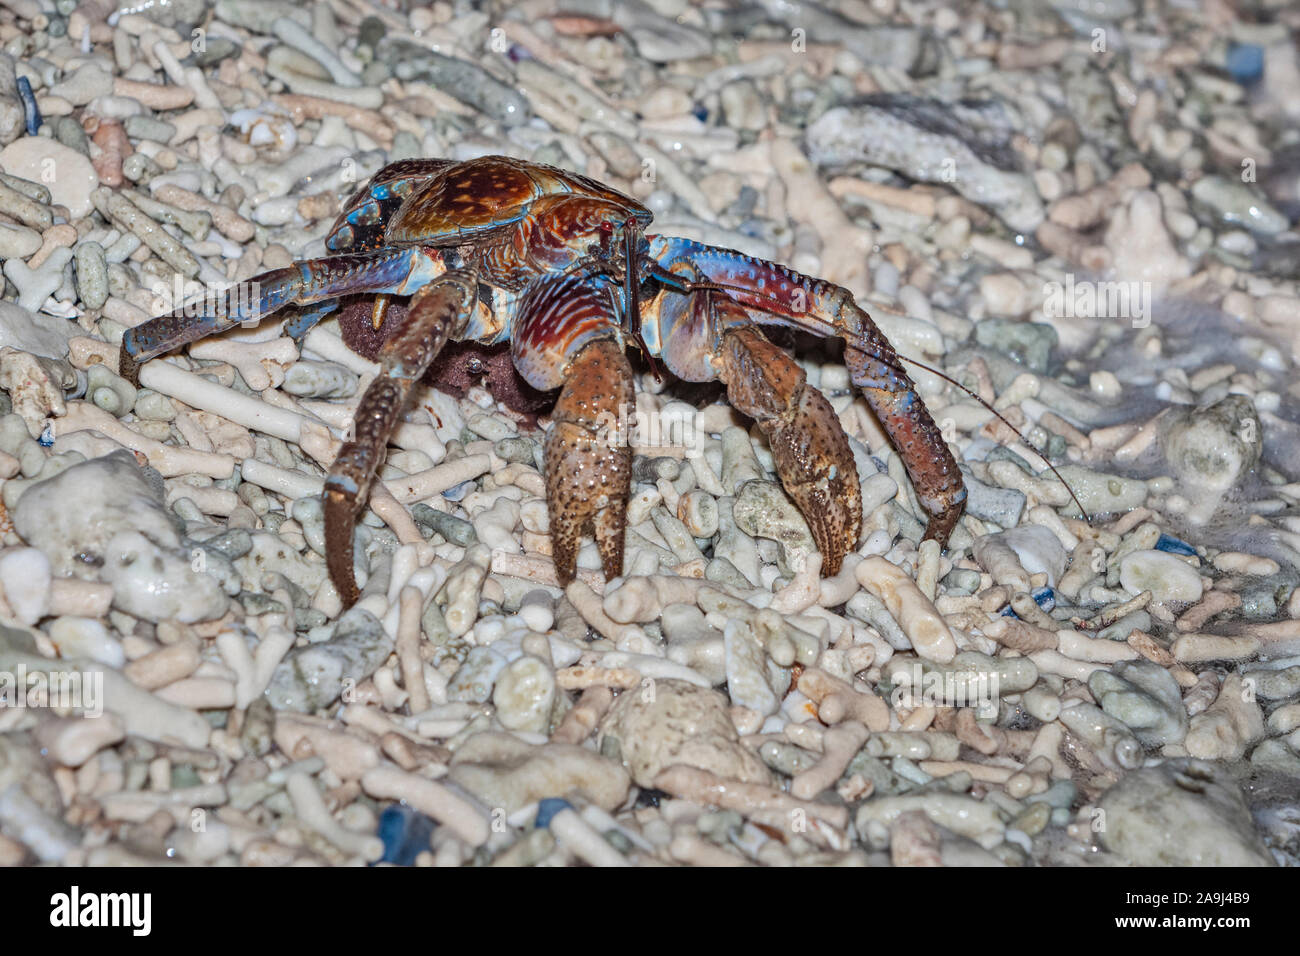 coconut crab, robber crab, or palm thief, Birgus latro, releasing eggs into ocean on coral rubble beach, Christmas Island, Australia Stock Photo